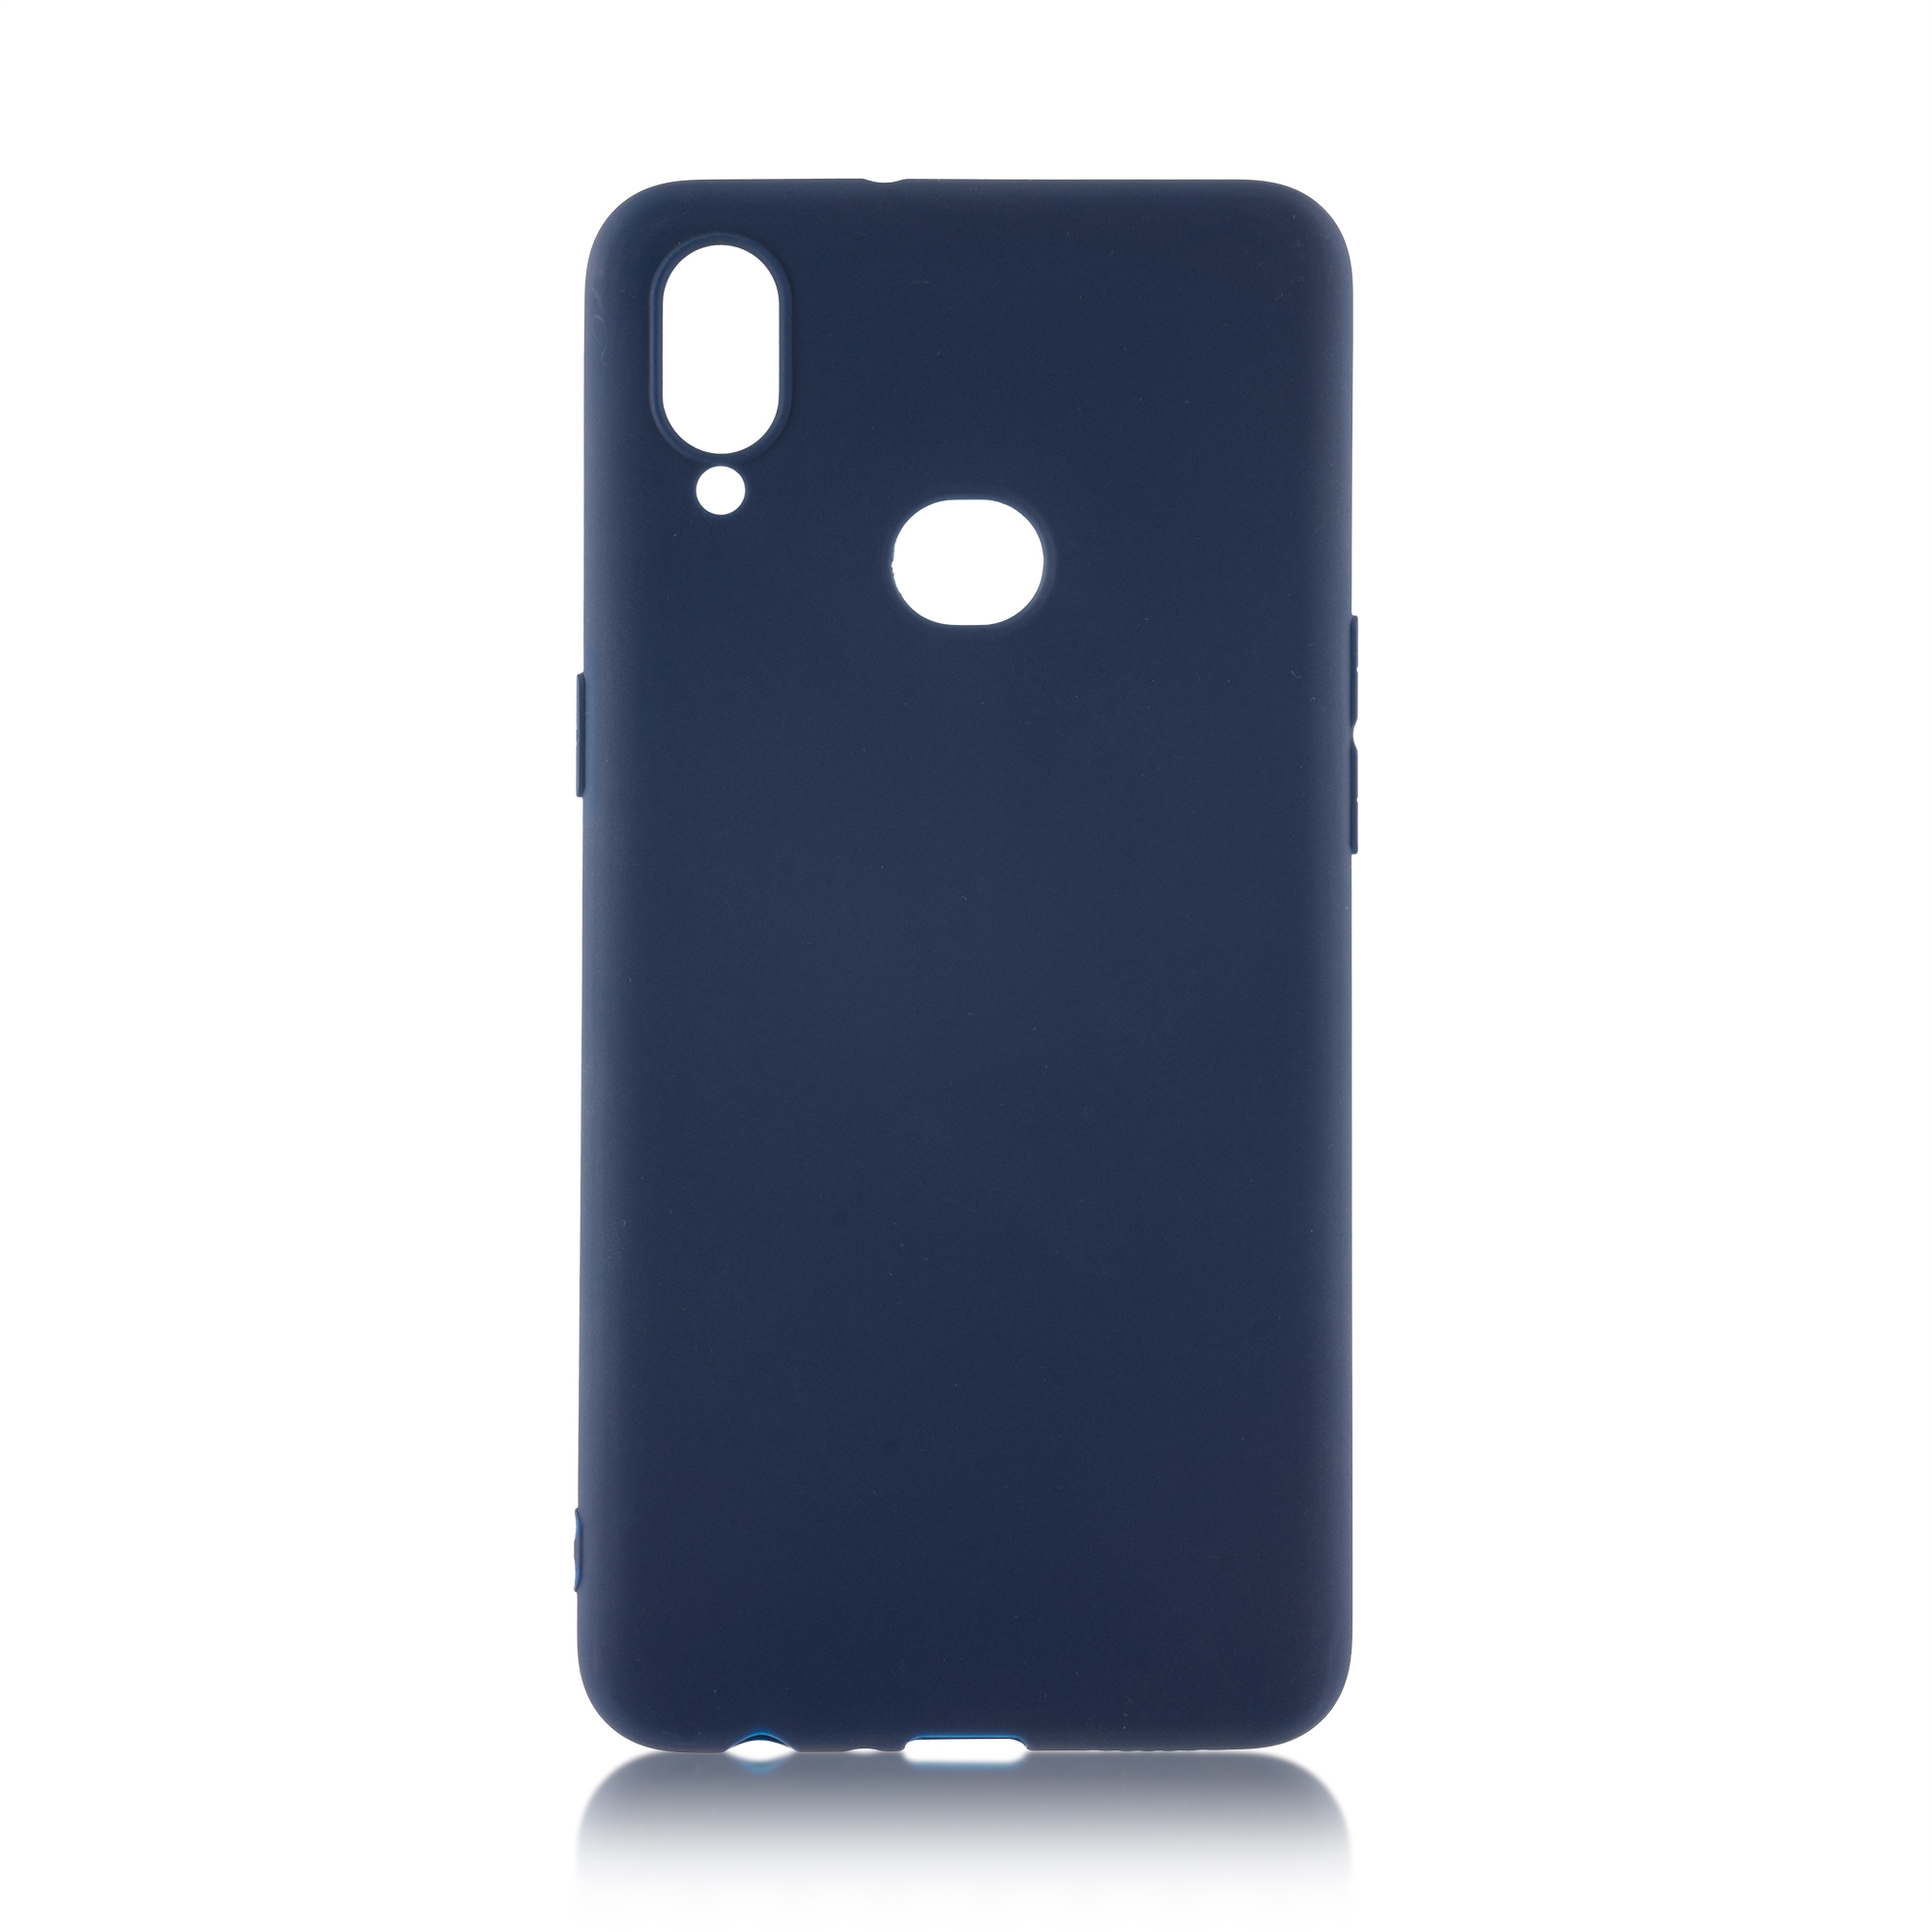 Чехол-накладка BROSCO Colourful для смартфона Samsung Galaxy A10s, силикон, синий (SS-A10S-COLOURFUL-BLUE)